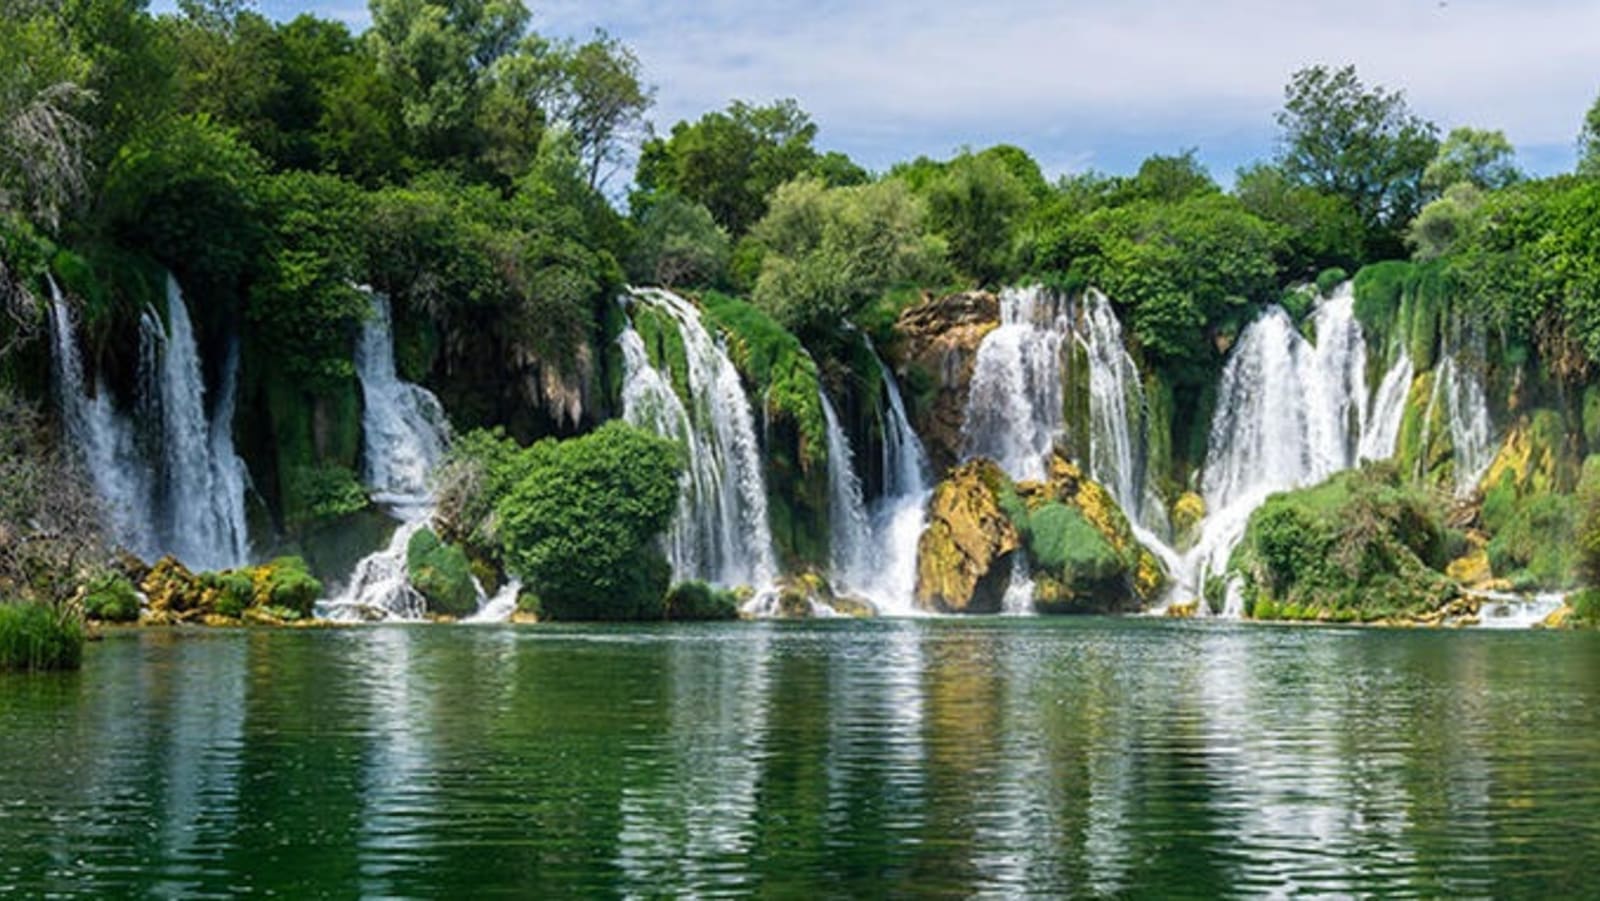 rs-kravica-waterfalls-bosnia-herzegovina-shutterstock_704552587.jpeg